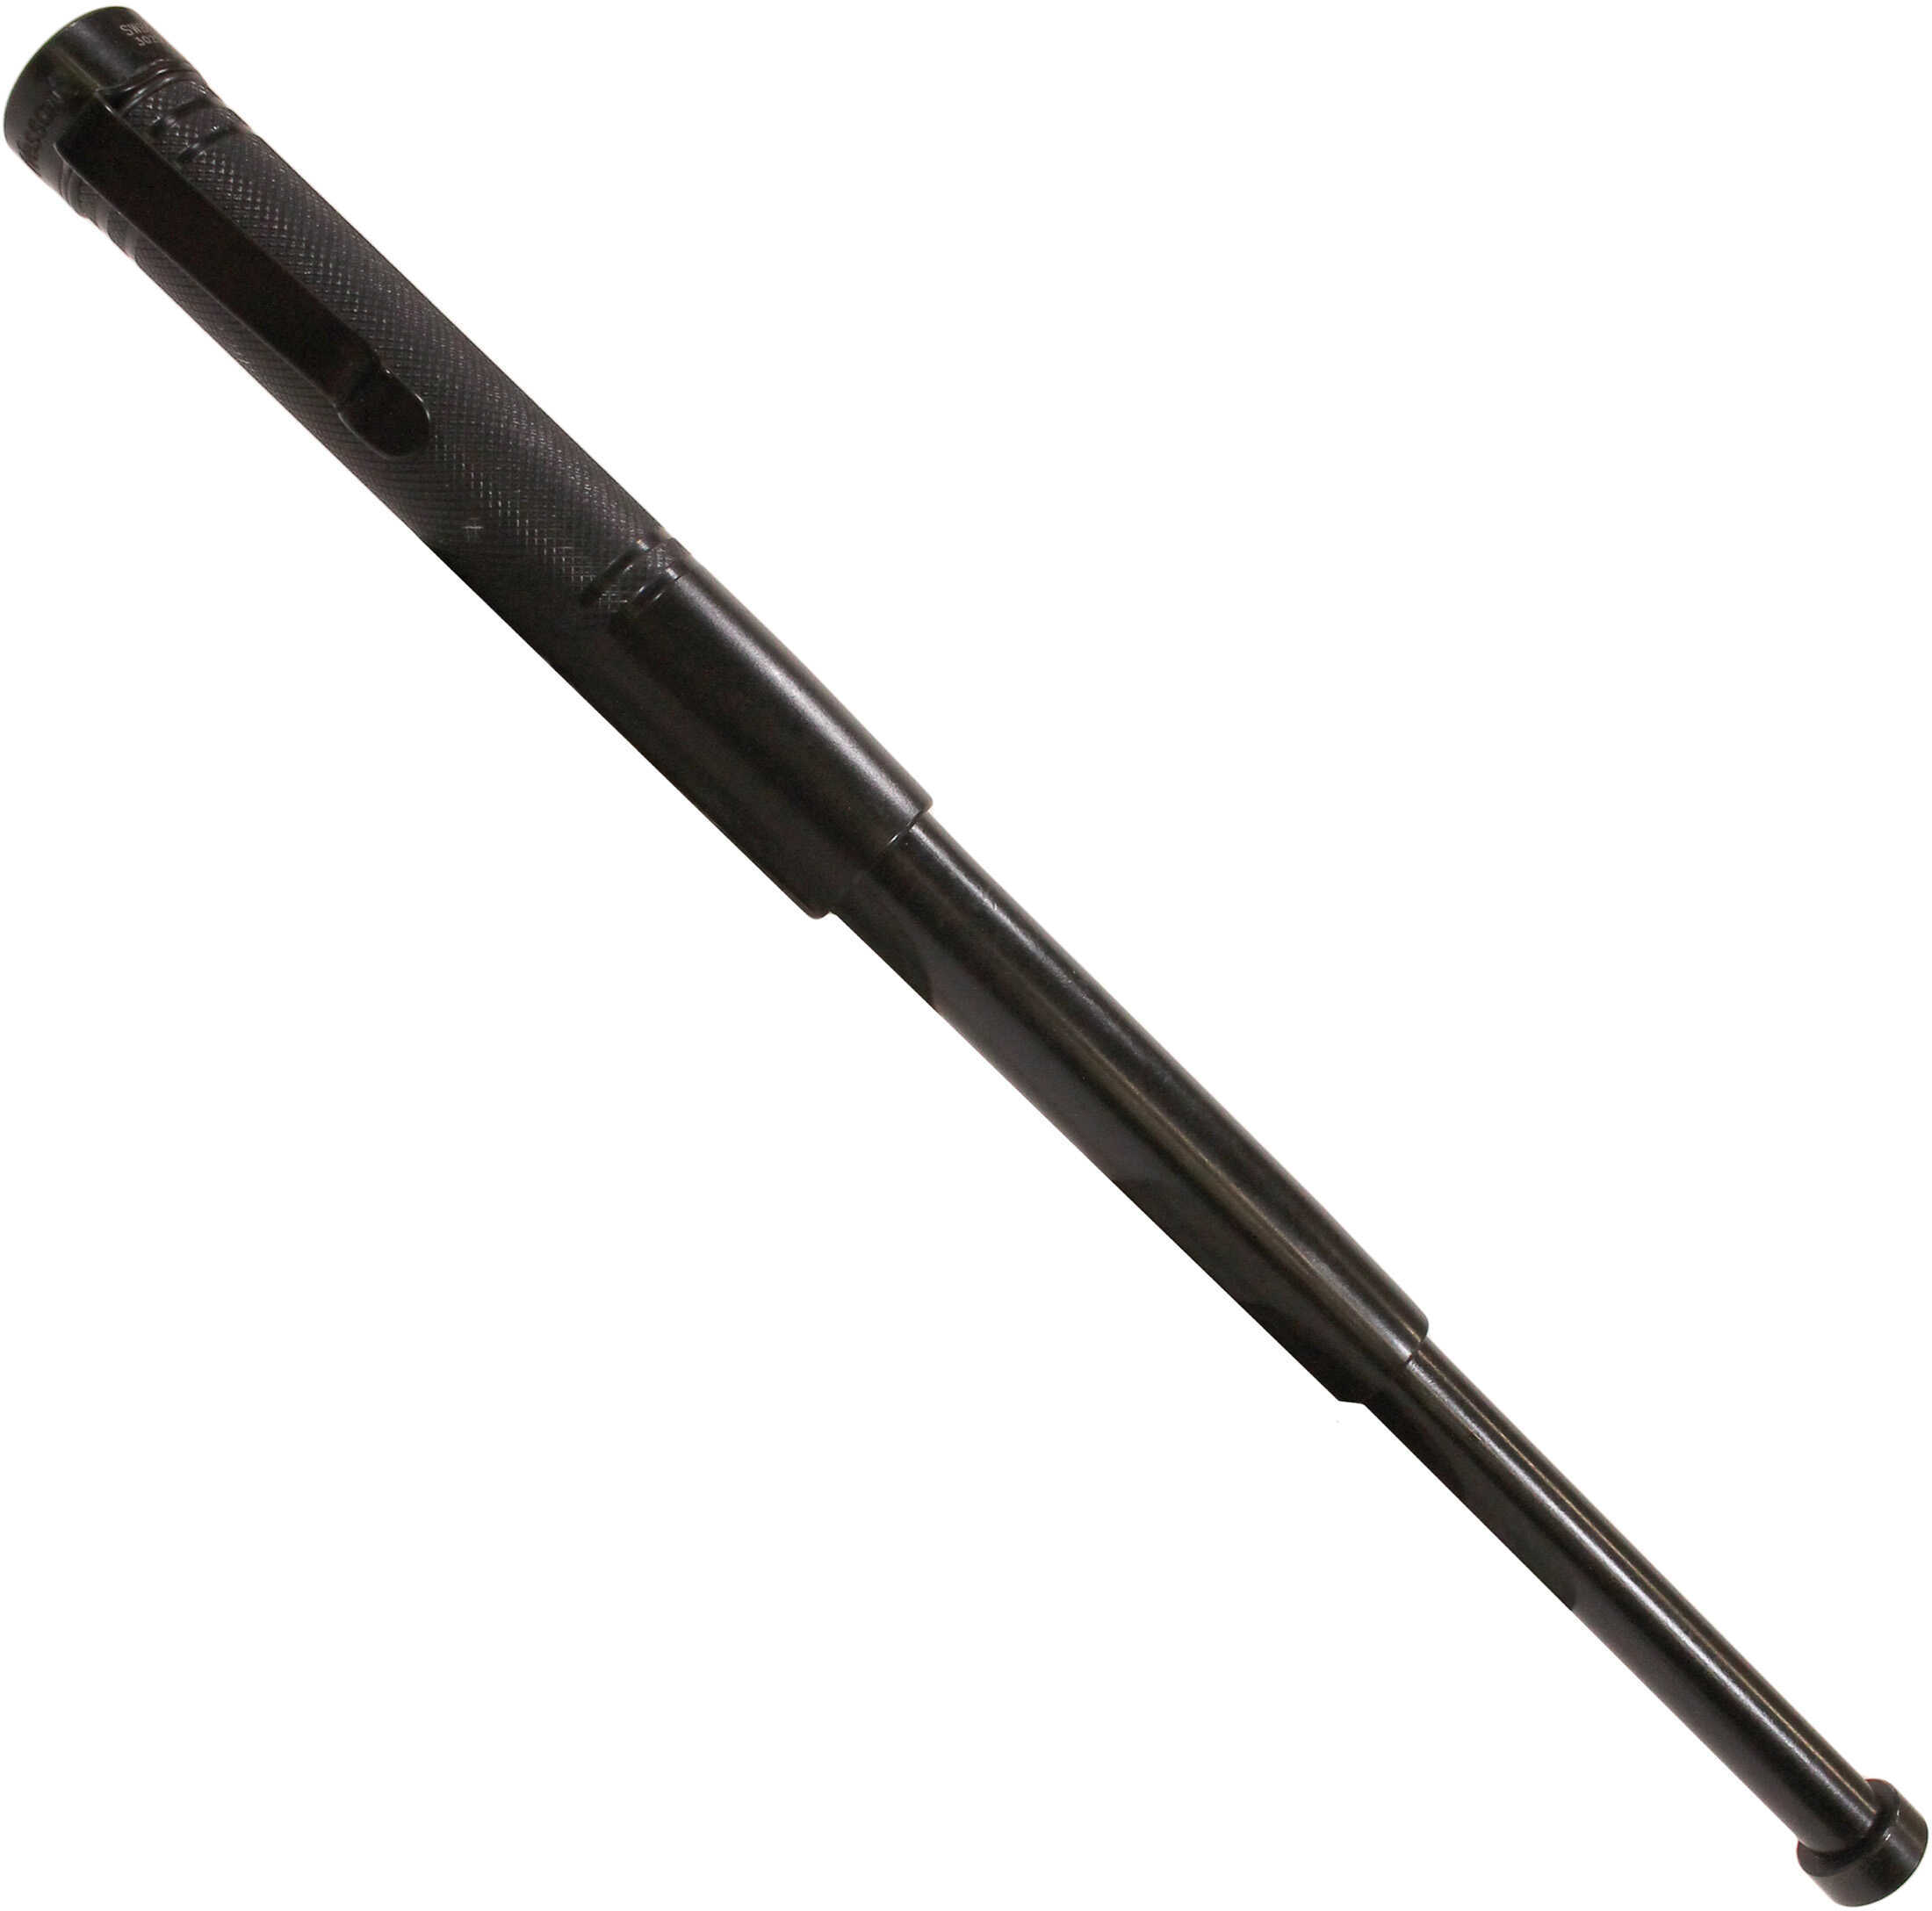 BTI Tools Collapsible Baton Small, Black, Boxed Md: SWBAT12B